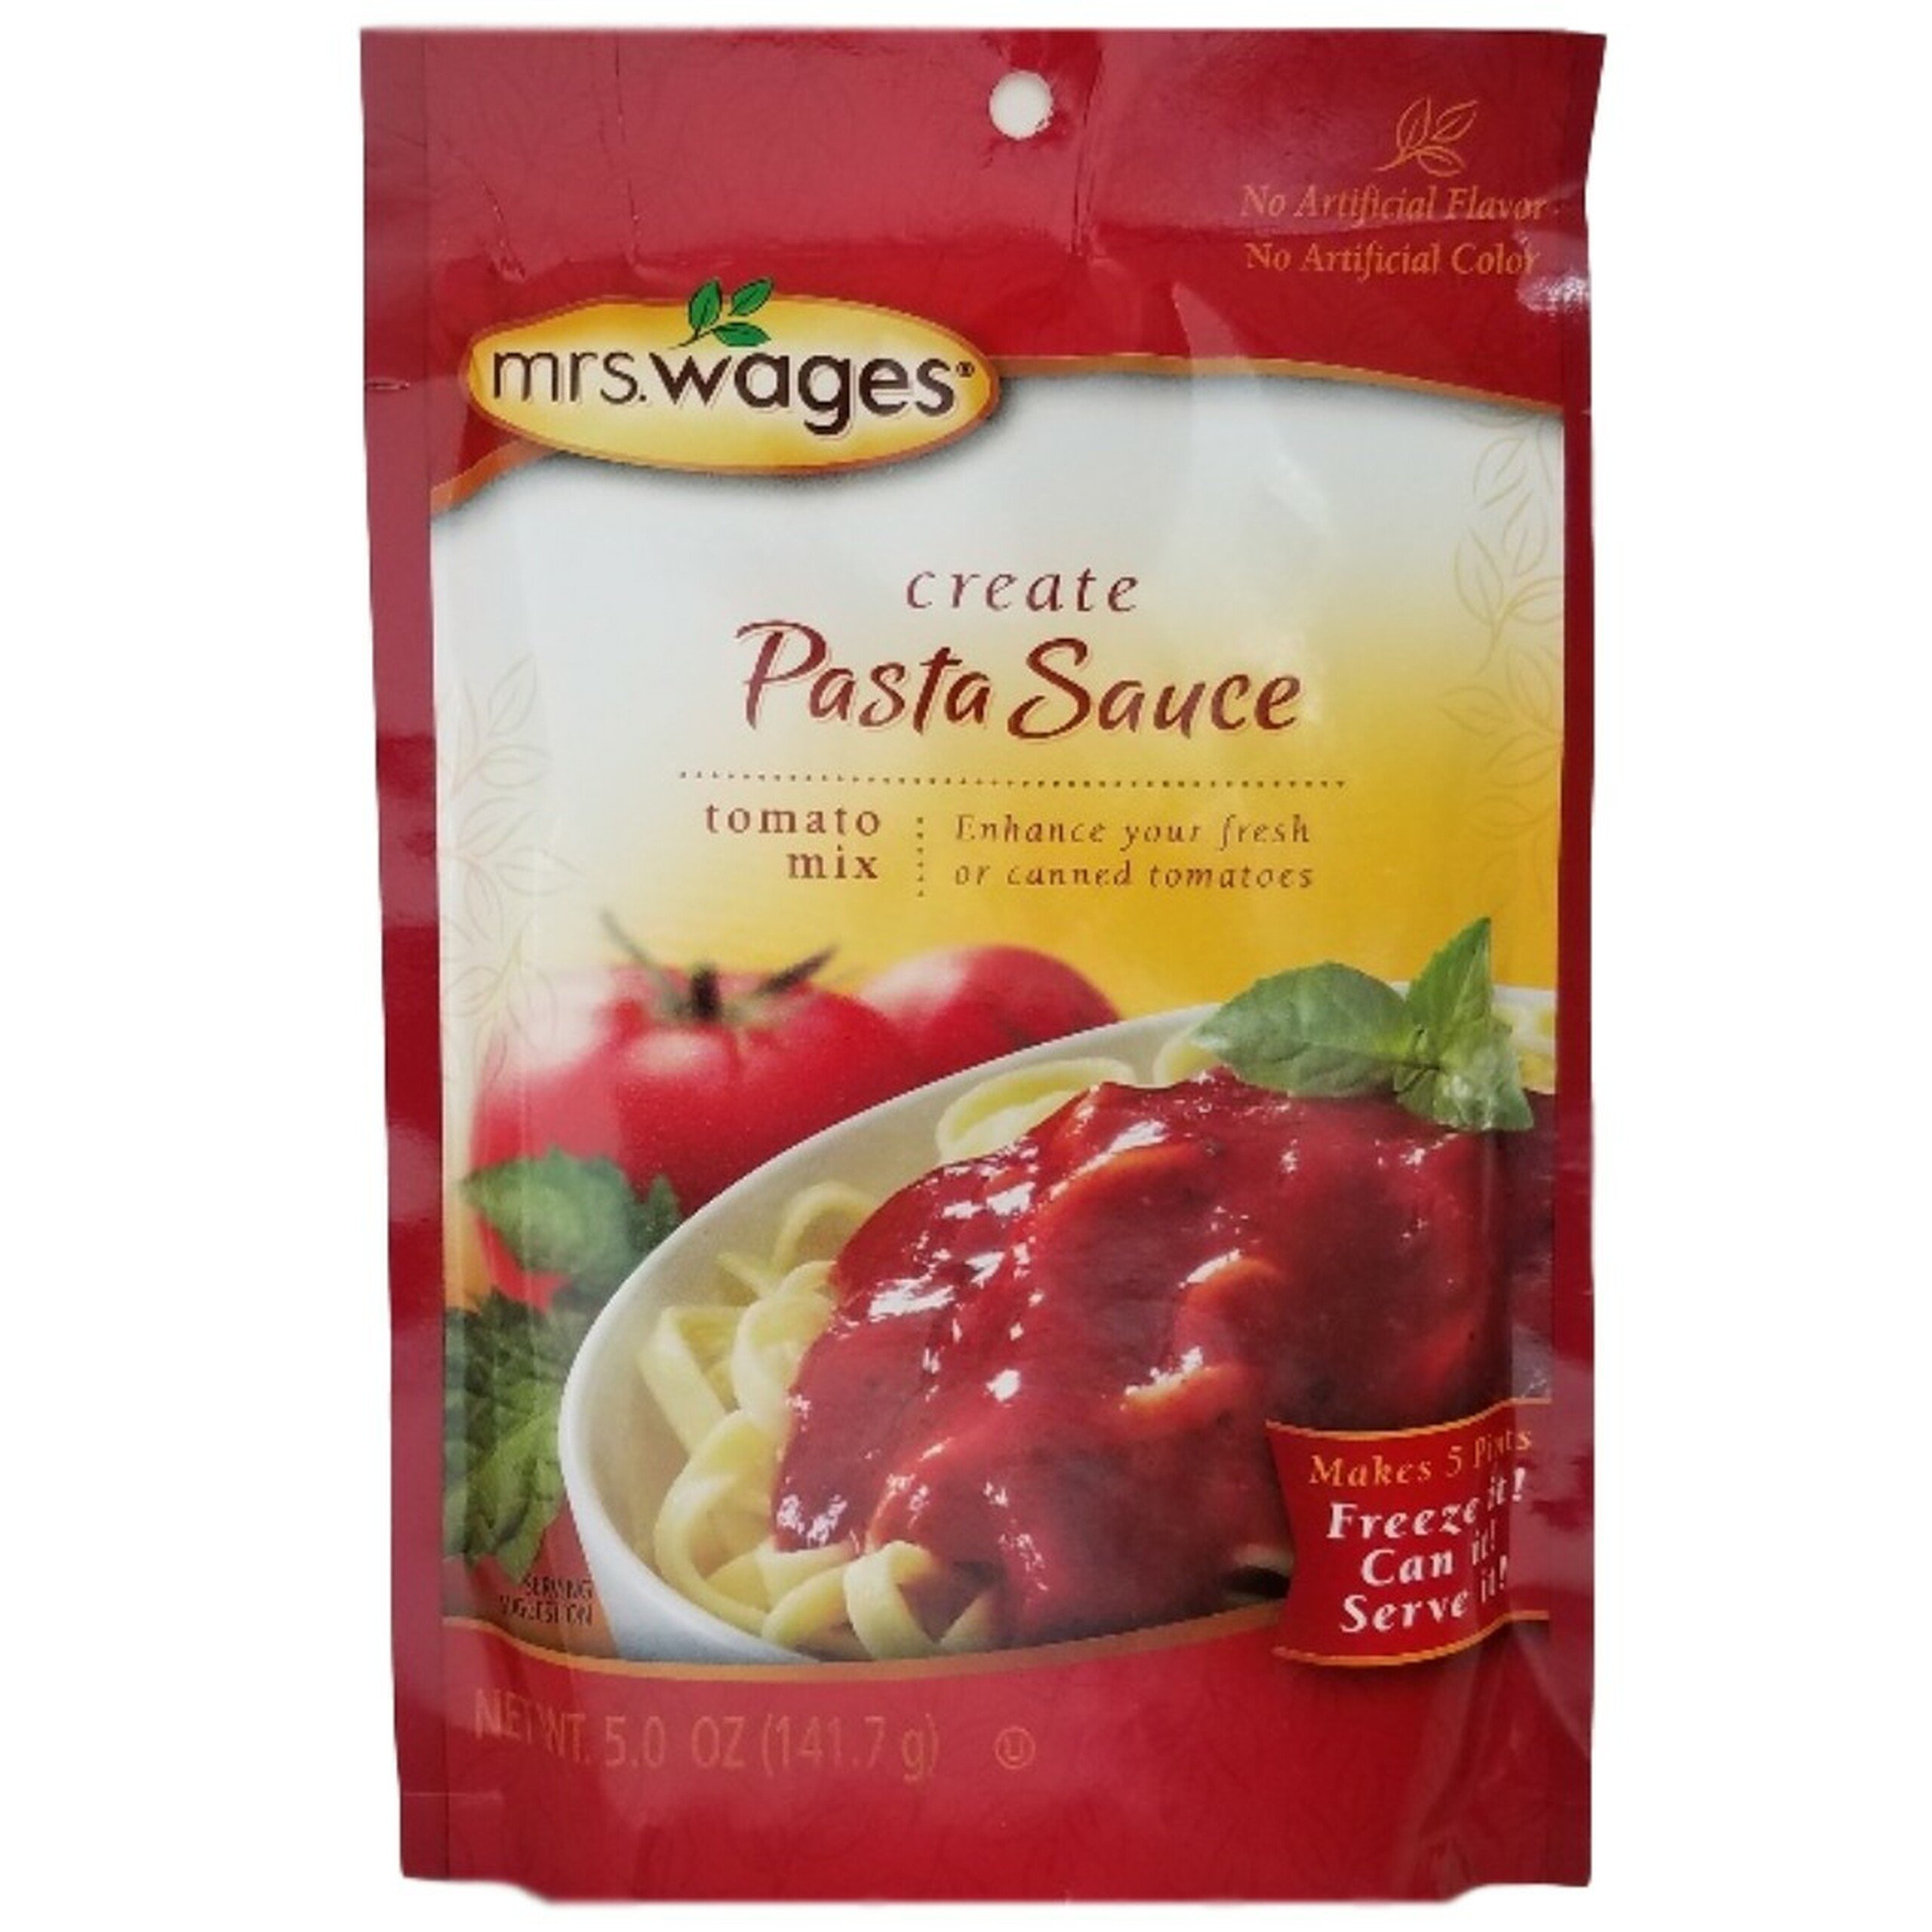 Mrs Wages Pasta Sauce Tomato Mix